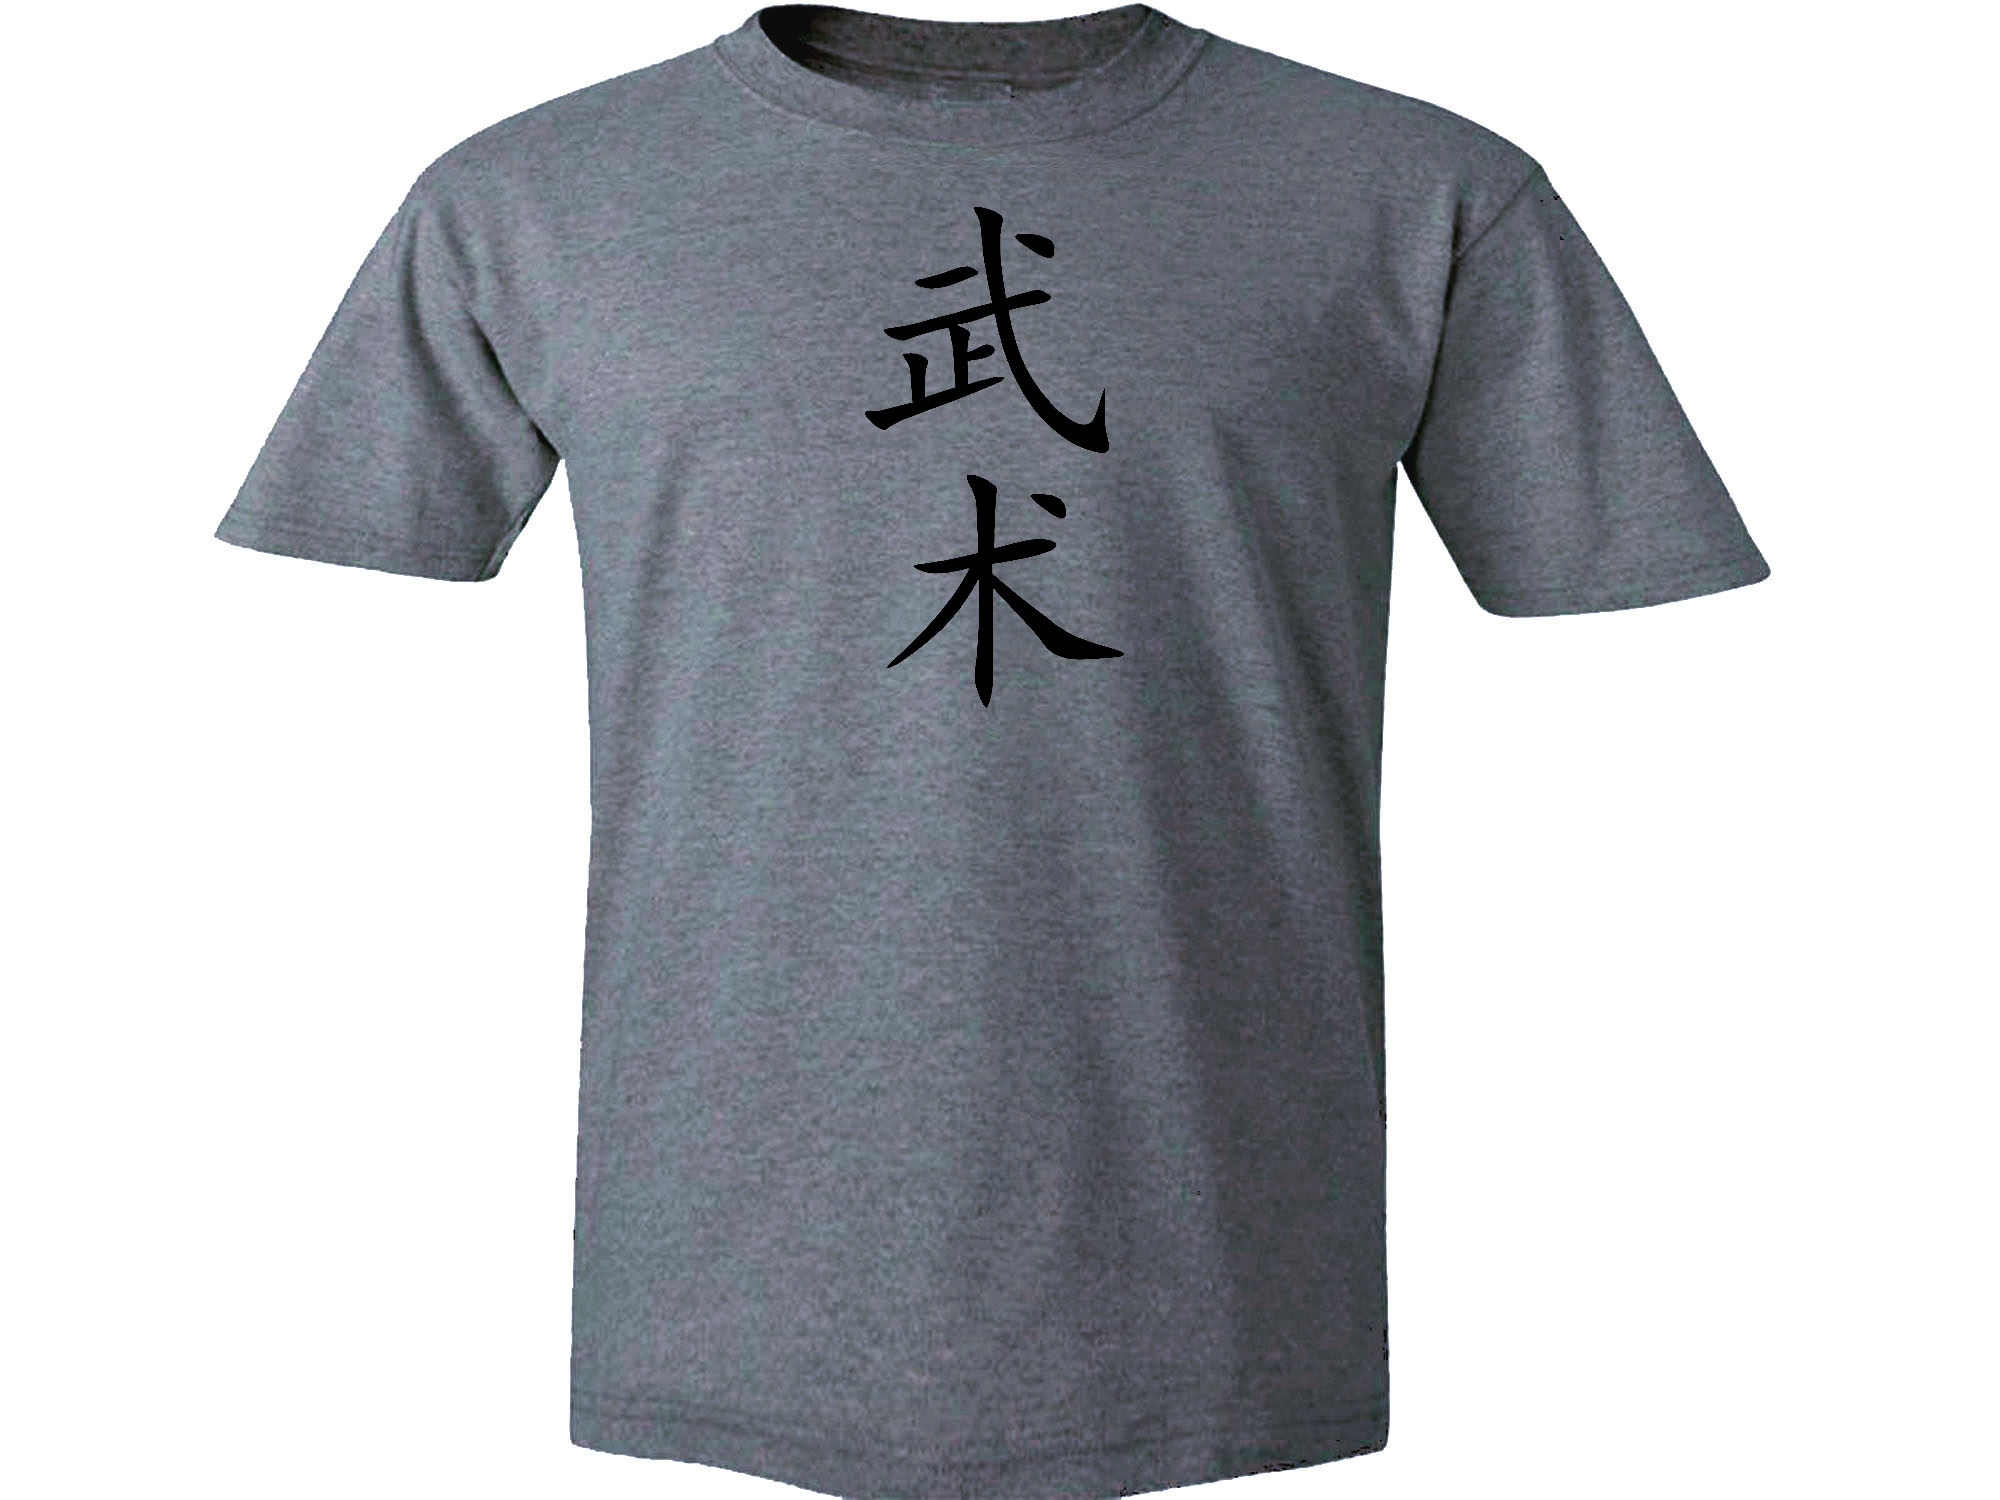 Wushu Chinese martial arts new t-shirt